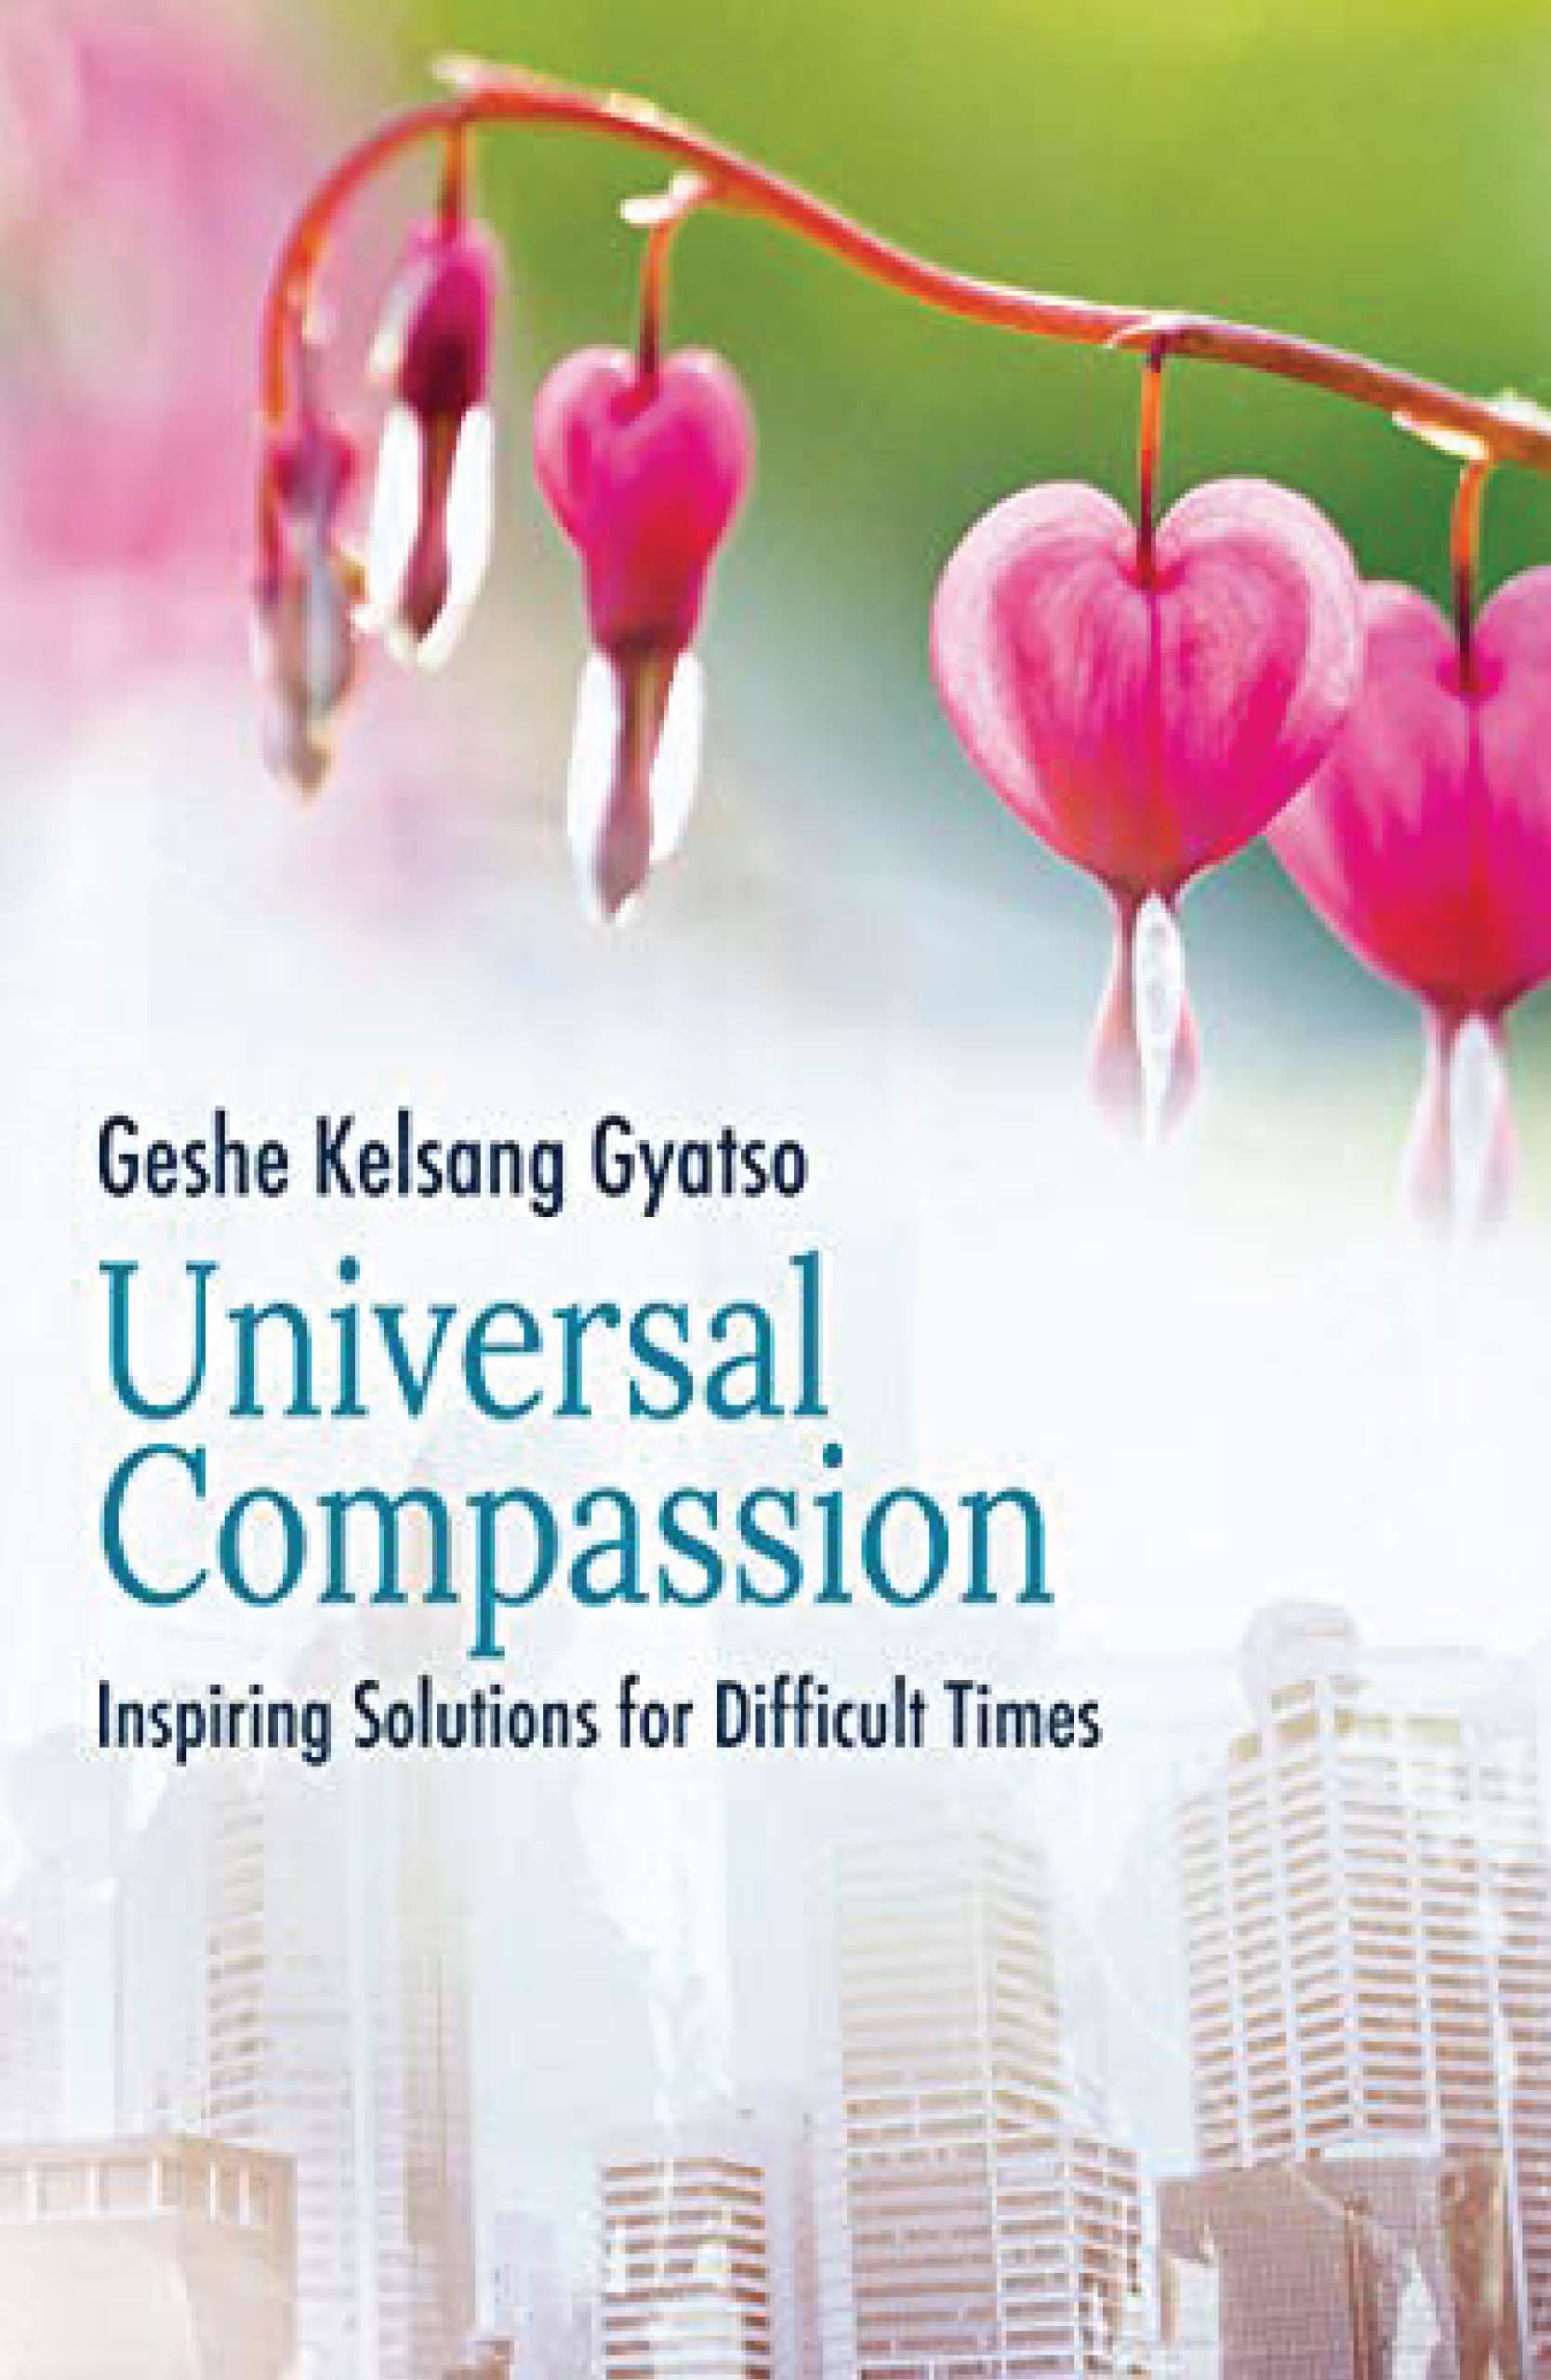 universal-compassion-kadampa-book-geshe-kelsang-gyatso